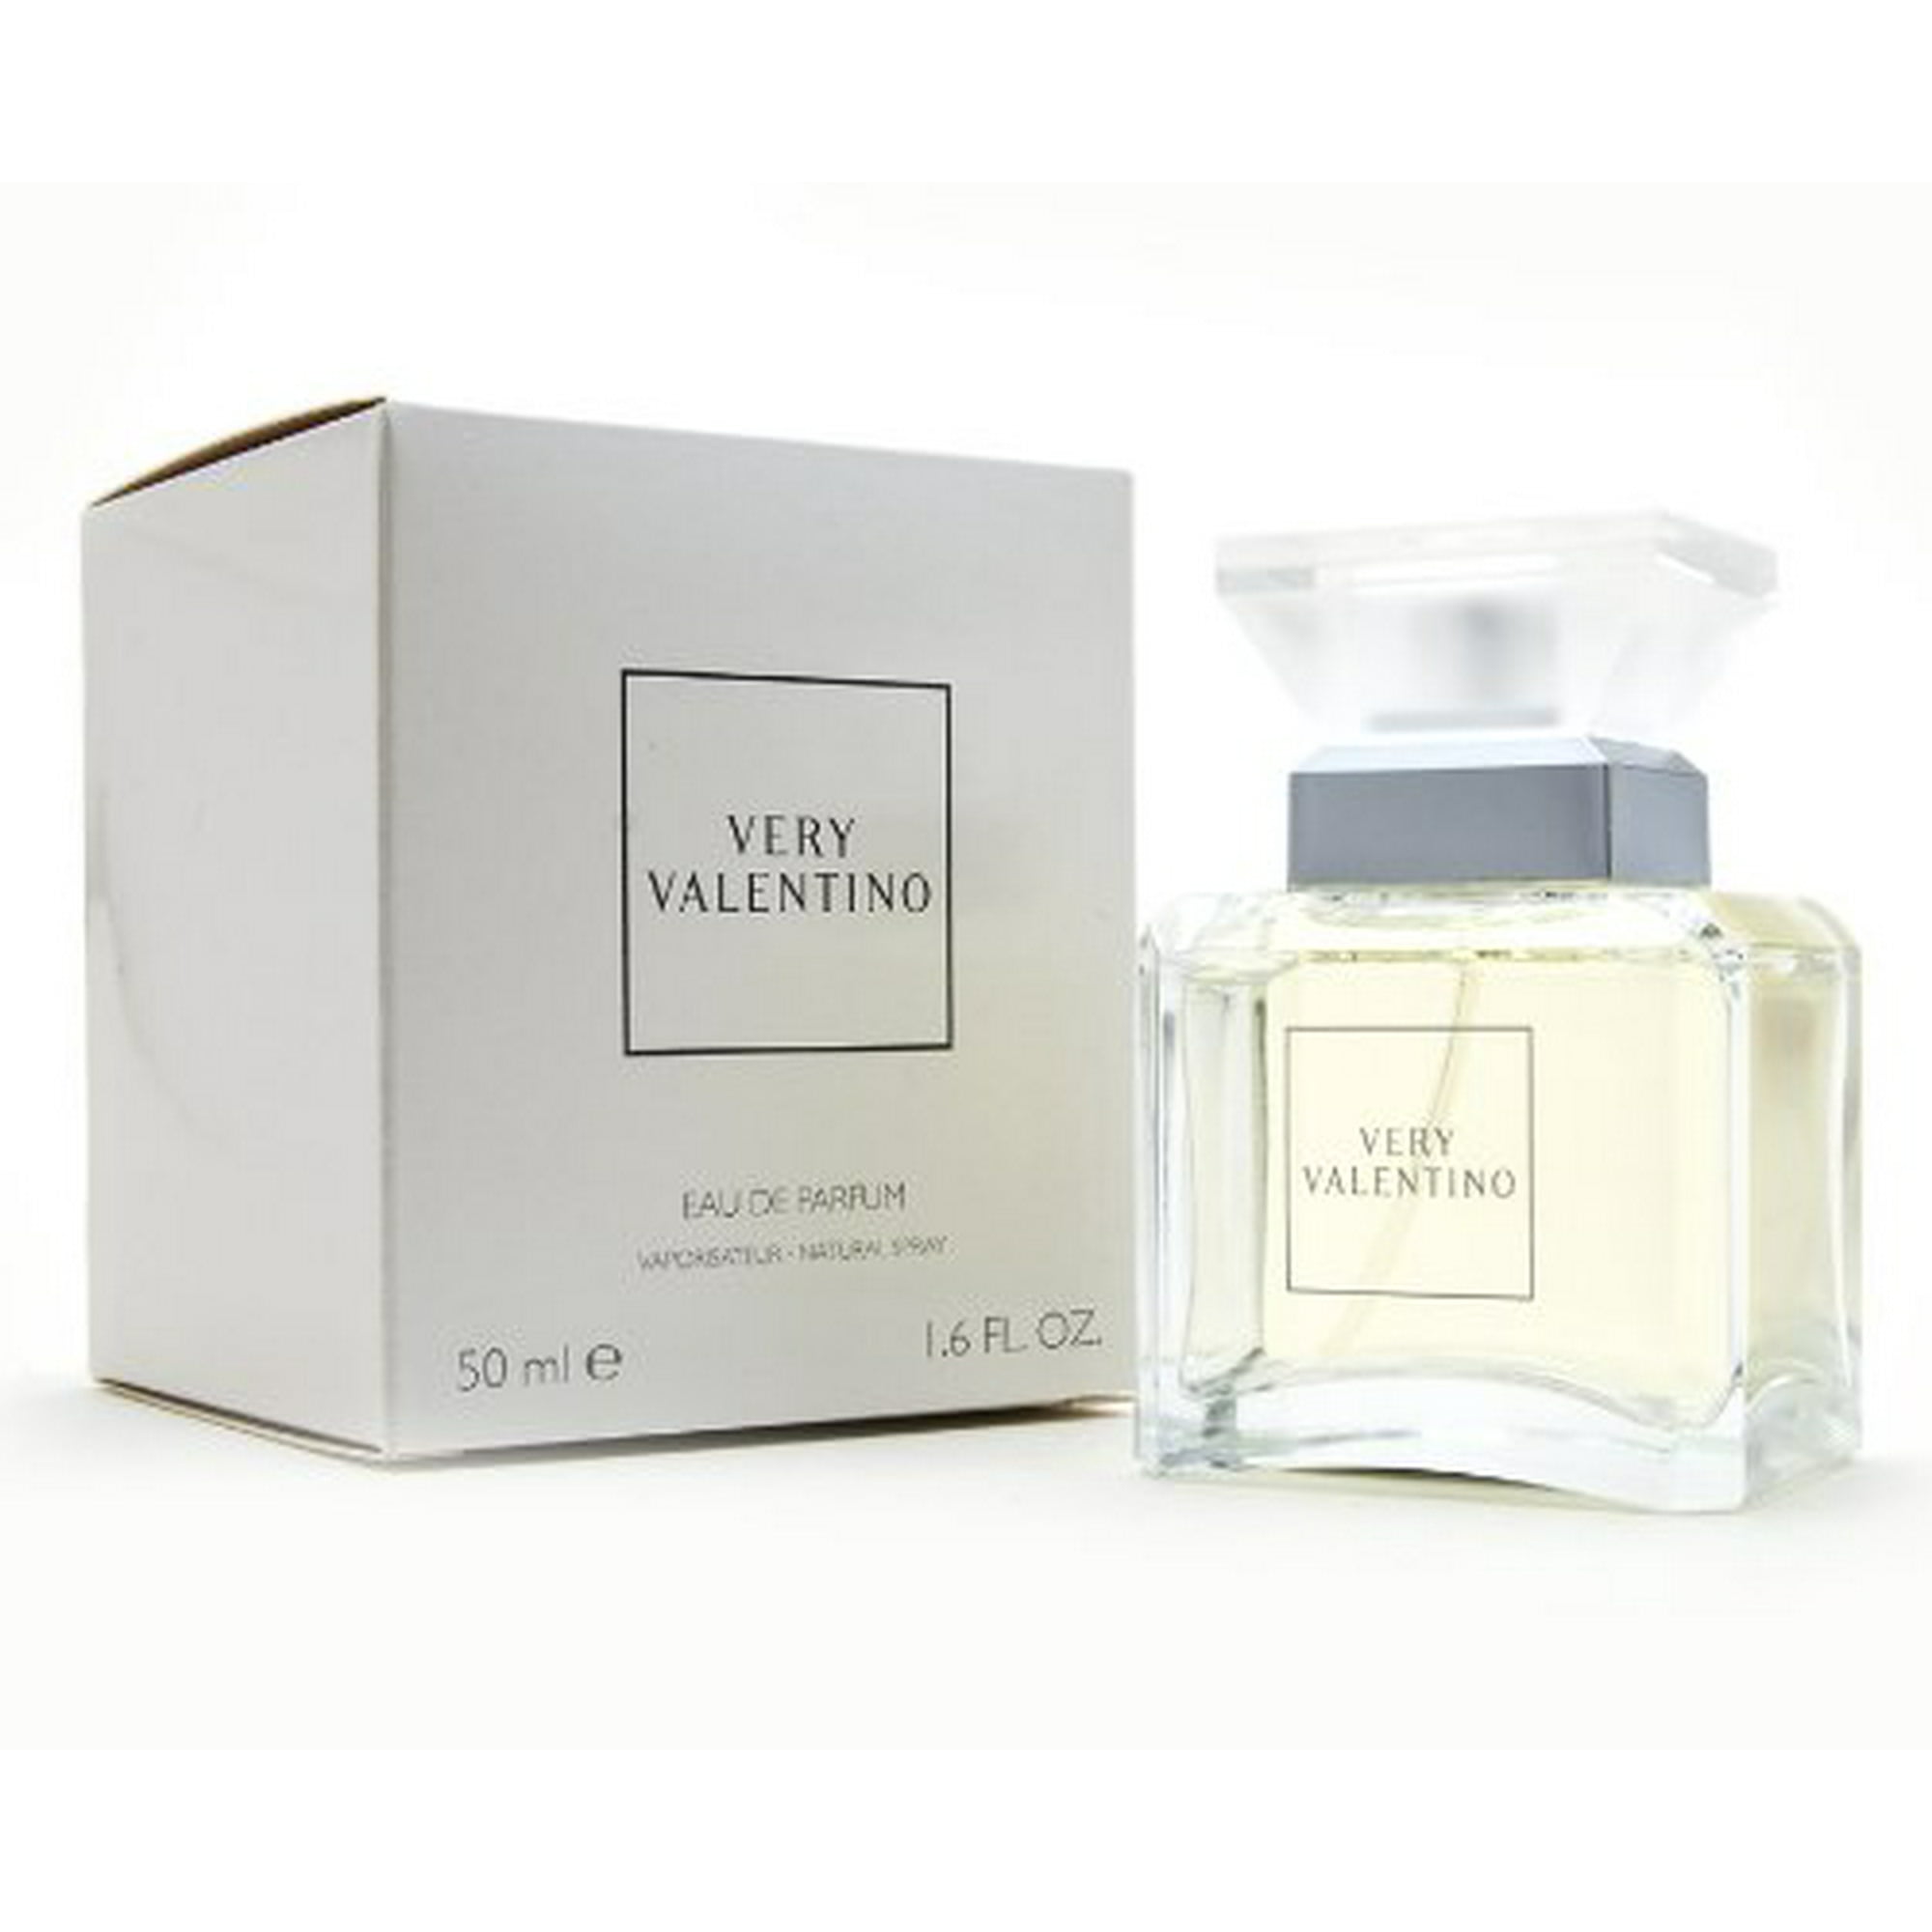 Very Valentino by Valentino 50 ml Eau De Parfum for | Walmart Canada